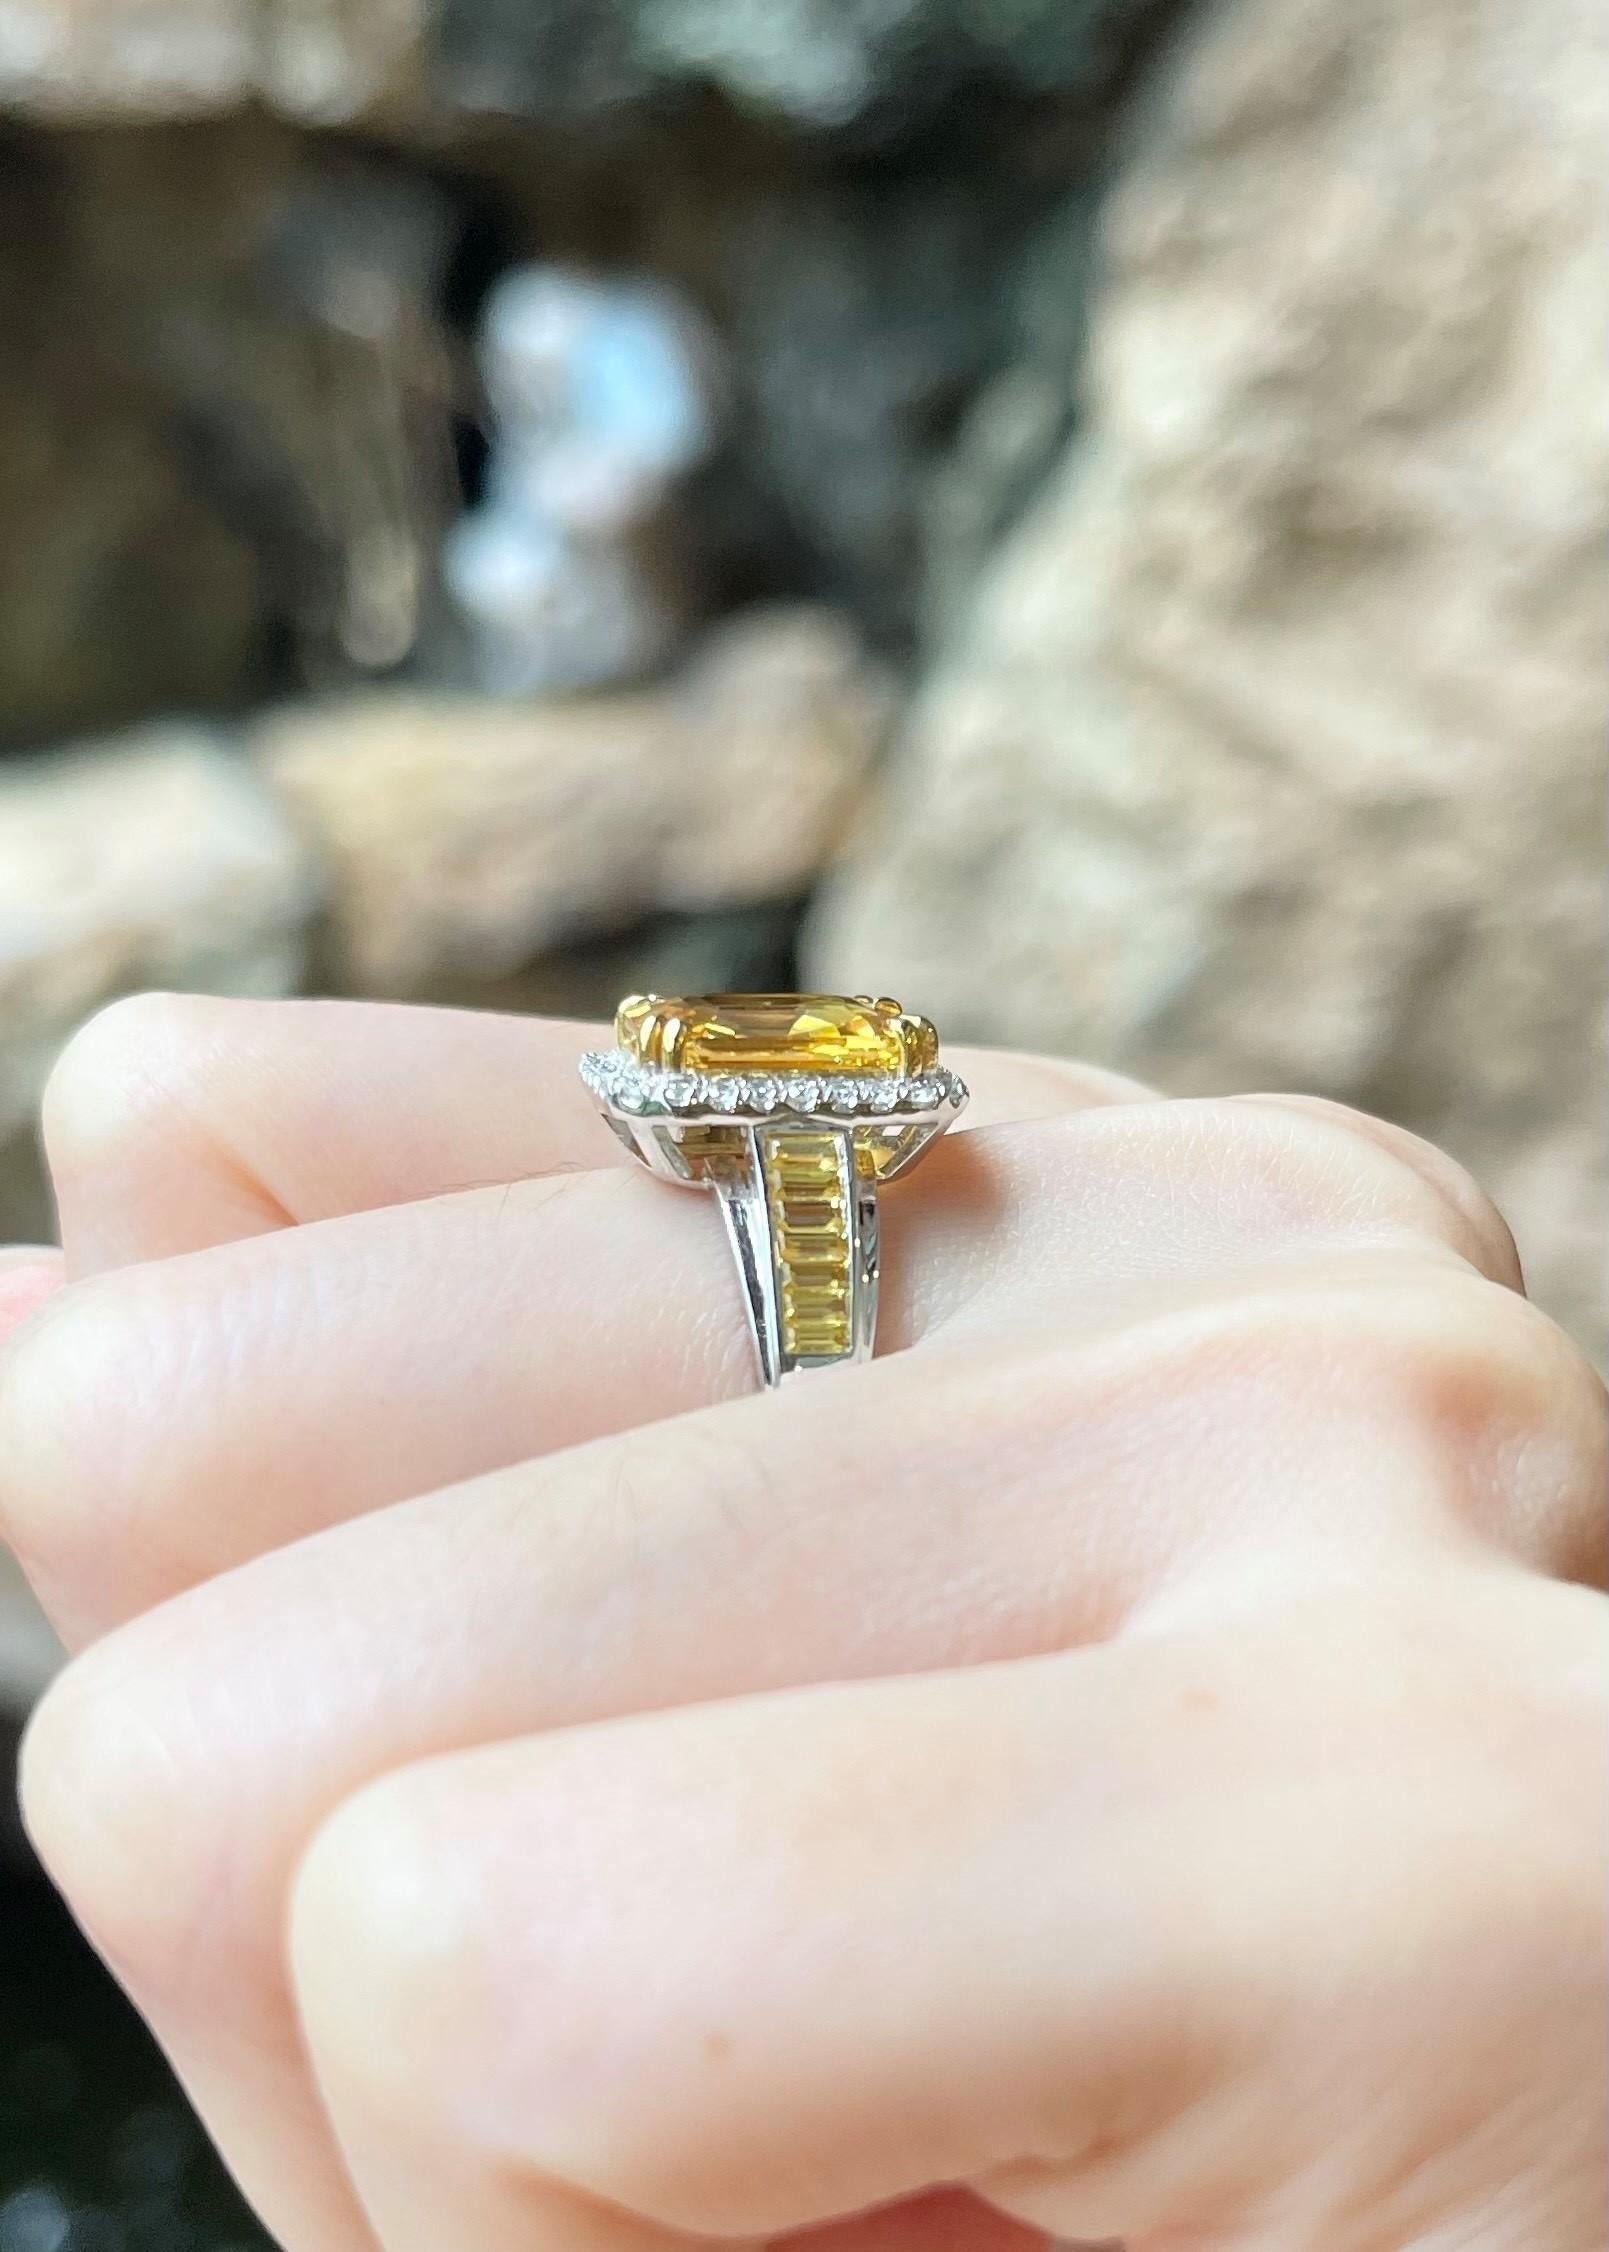 Yellow Sapphire 5.09 carats, Yellow Sapphire 1.81 carats and Diamond 0.29 carat Ring set in 18K White Gold Settings

Width:  1.2 cm 
Length: 1.5 cm
Ring Size: 54
Total Weight: 7.72 grams

